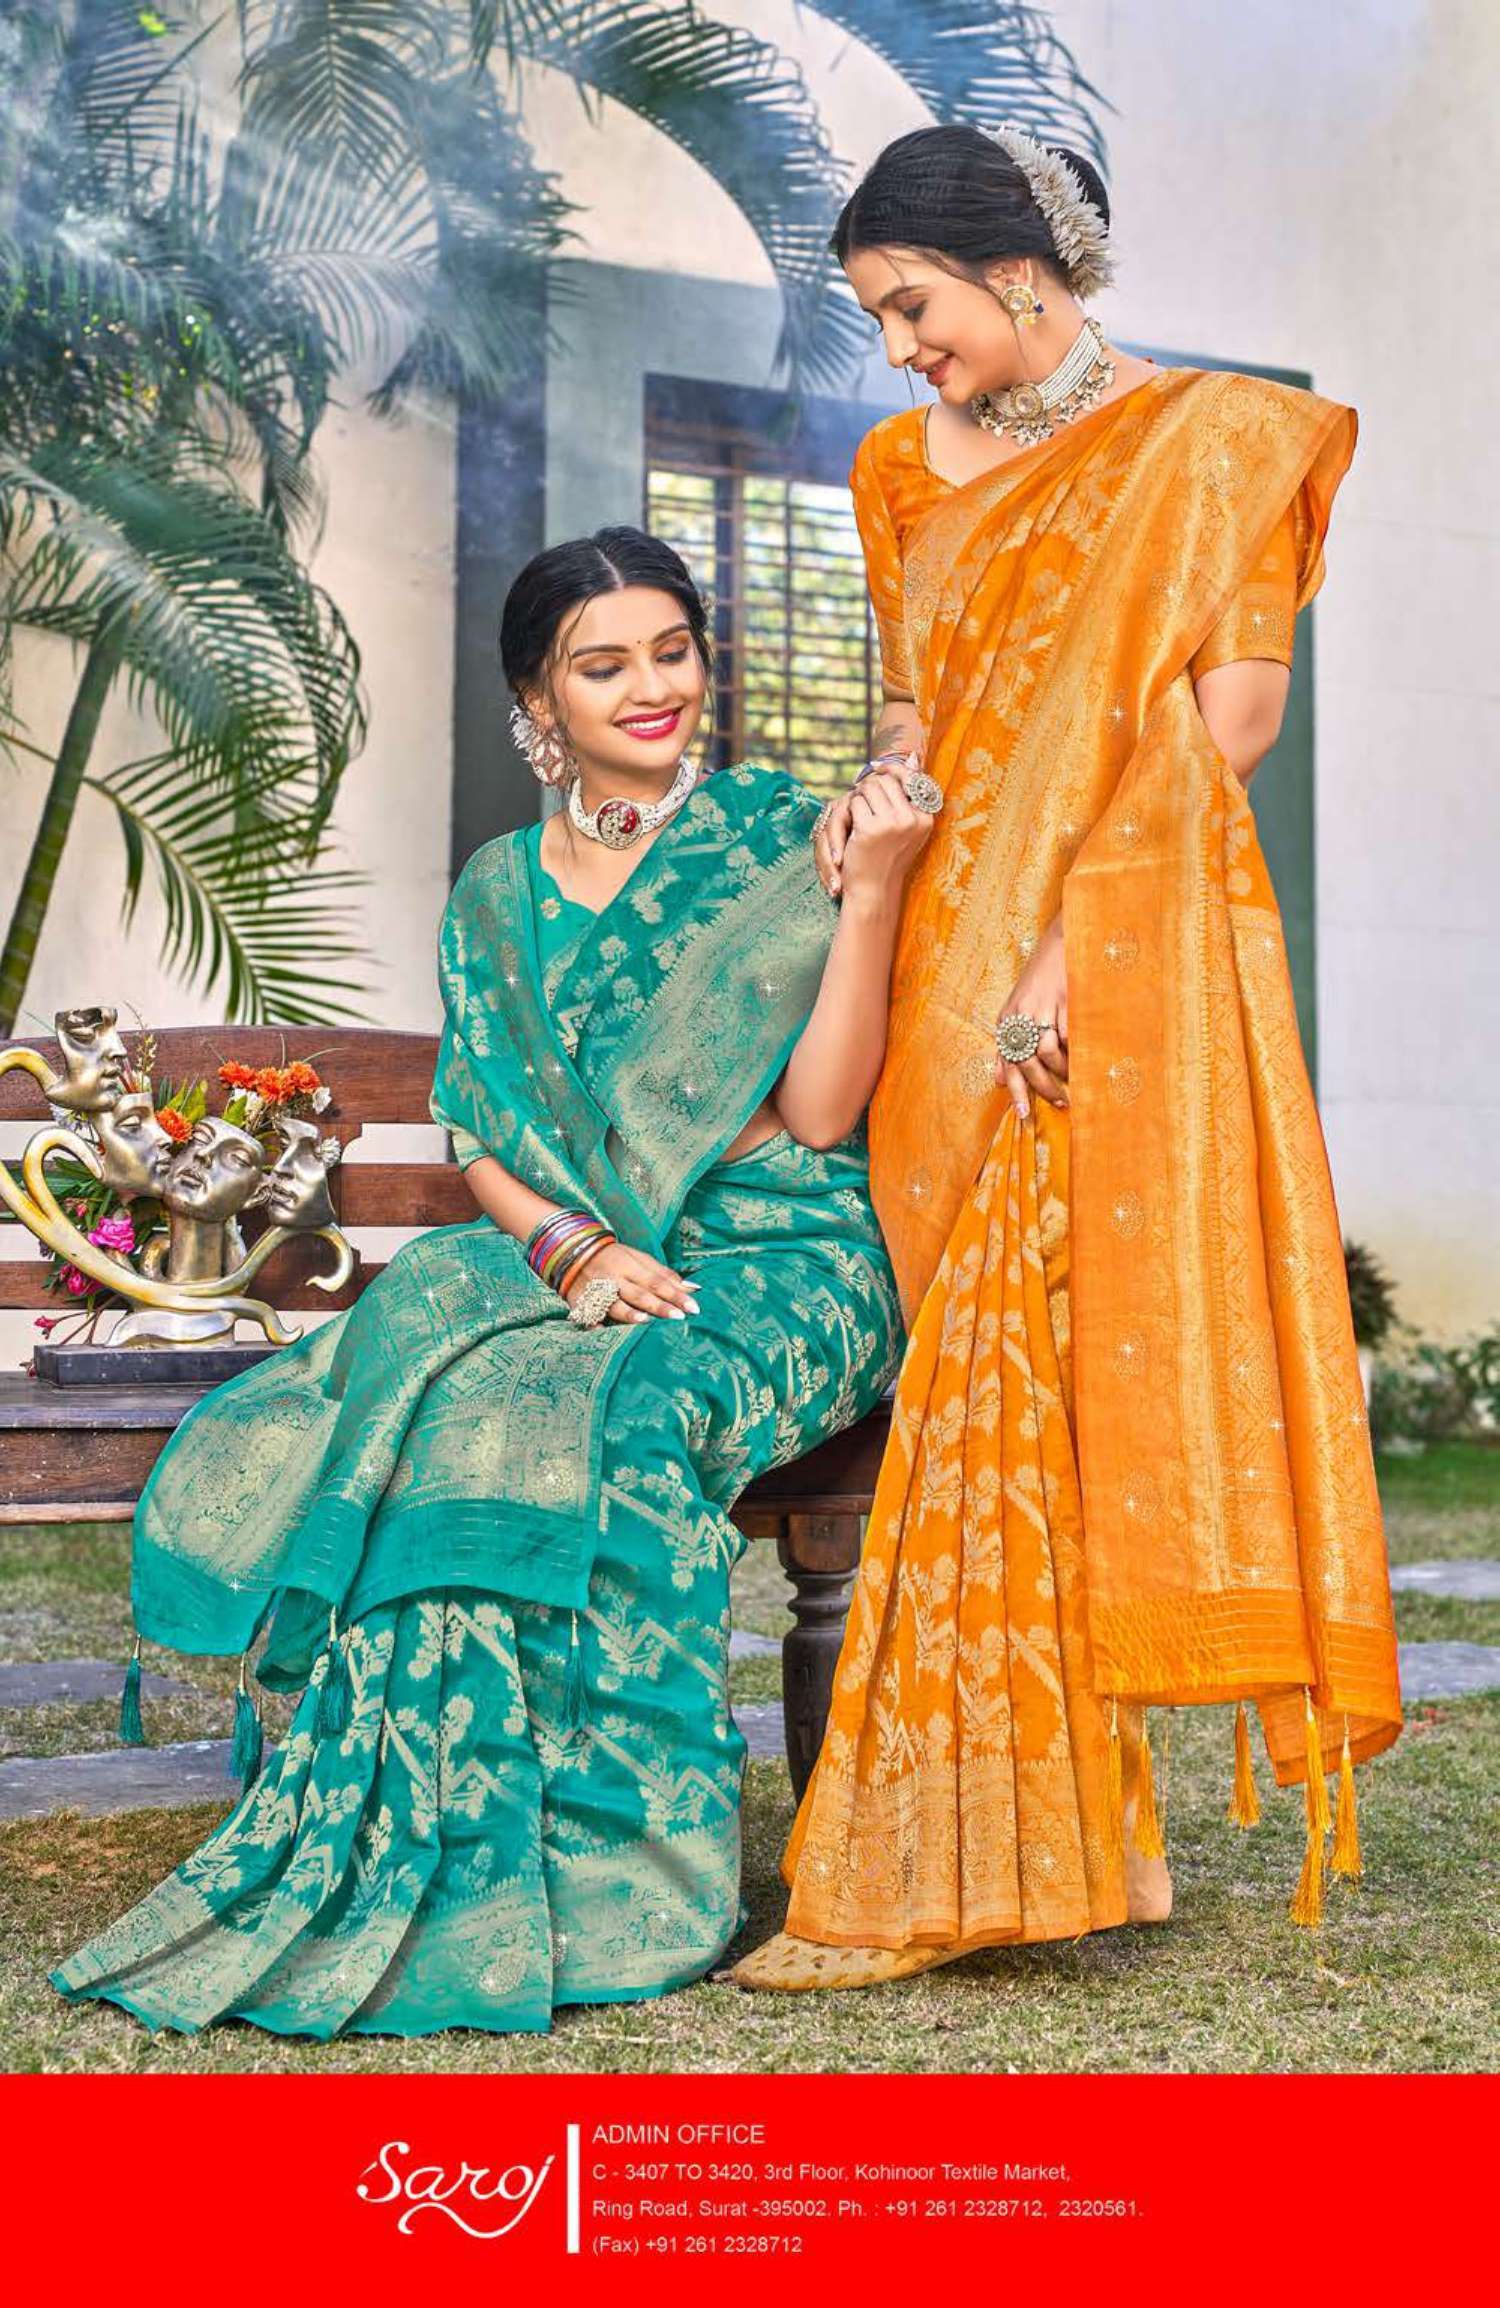 Saroj textile presents Chaaru Vol 4 Banarasi sarees catalogue Collection At Wholesale Price 